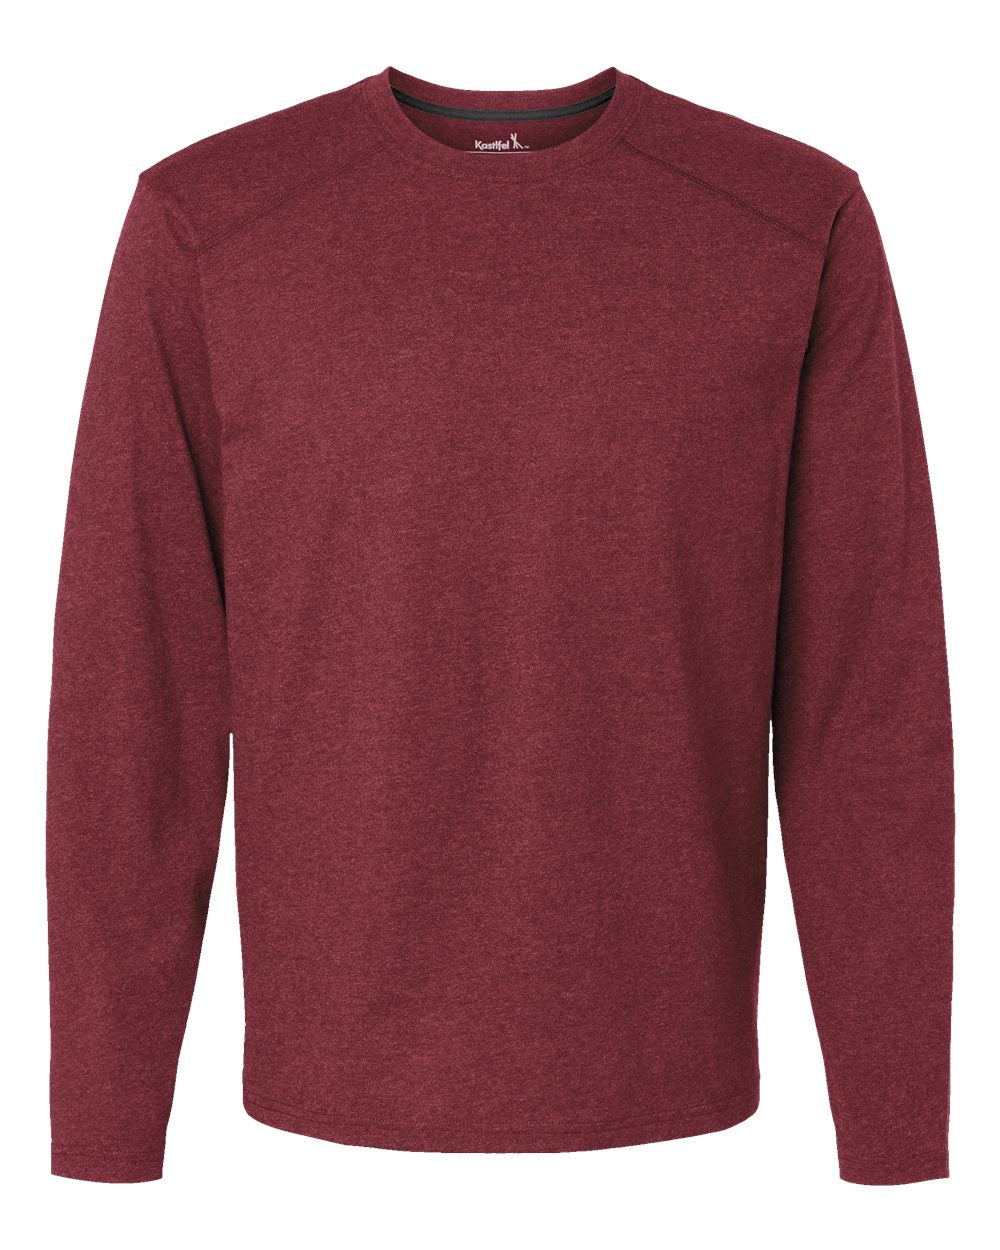 Customizable kastlfel recycledsoft long sleeve shirt in burgundy.